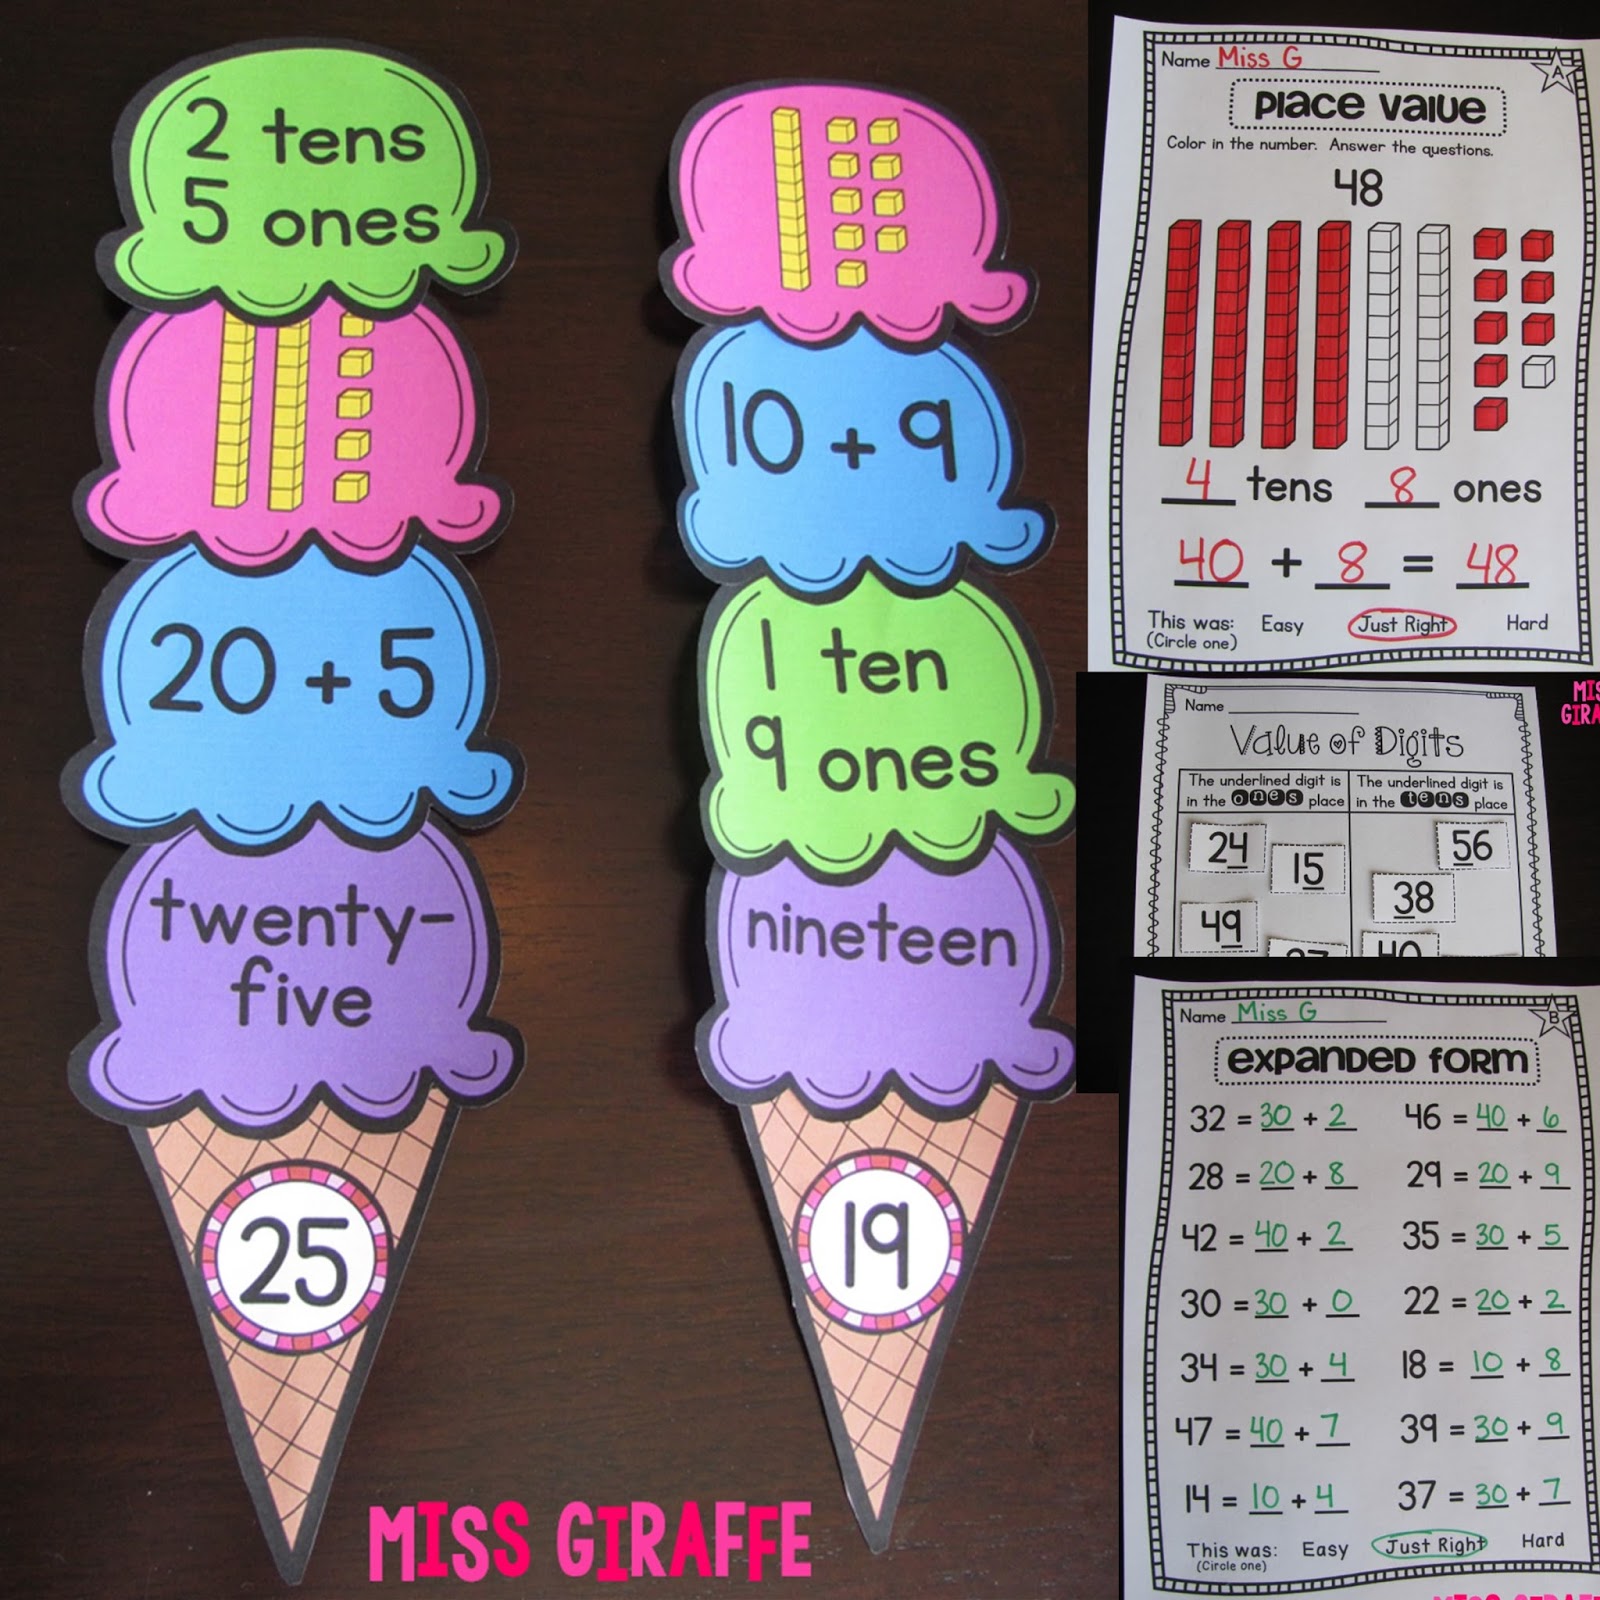 Miss Giraffe's Class: First Grade Math Ideas for the Entire Year!